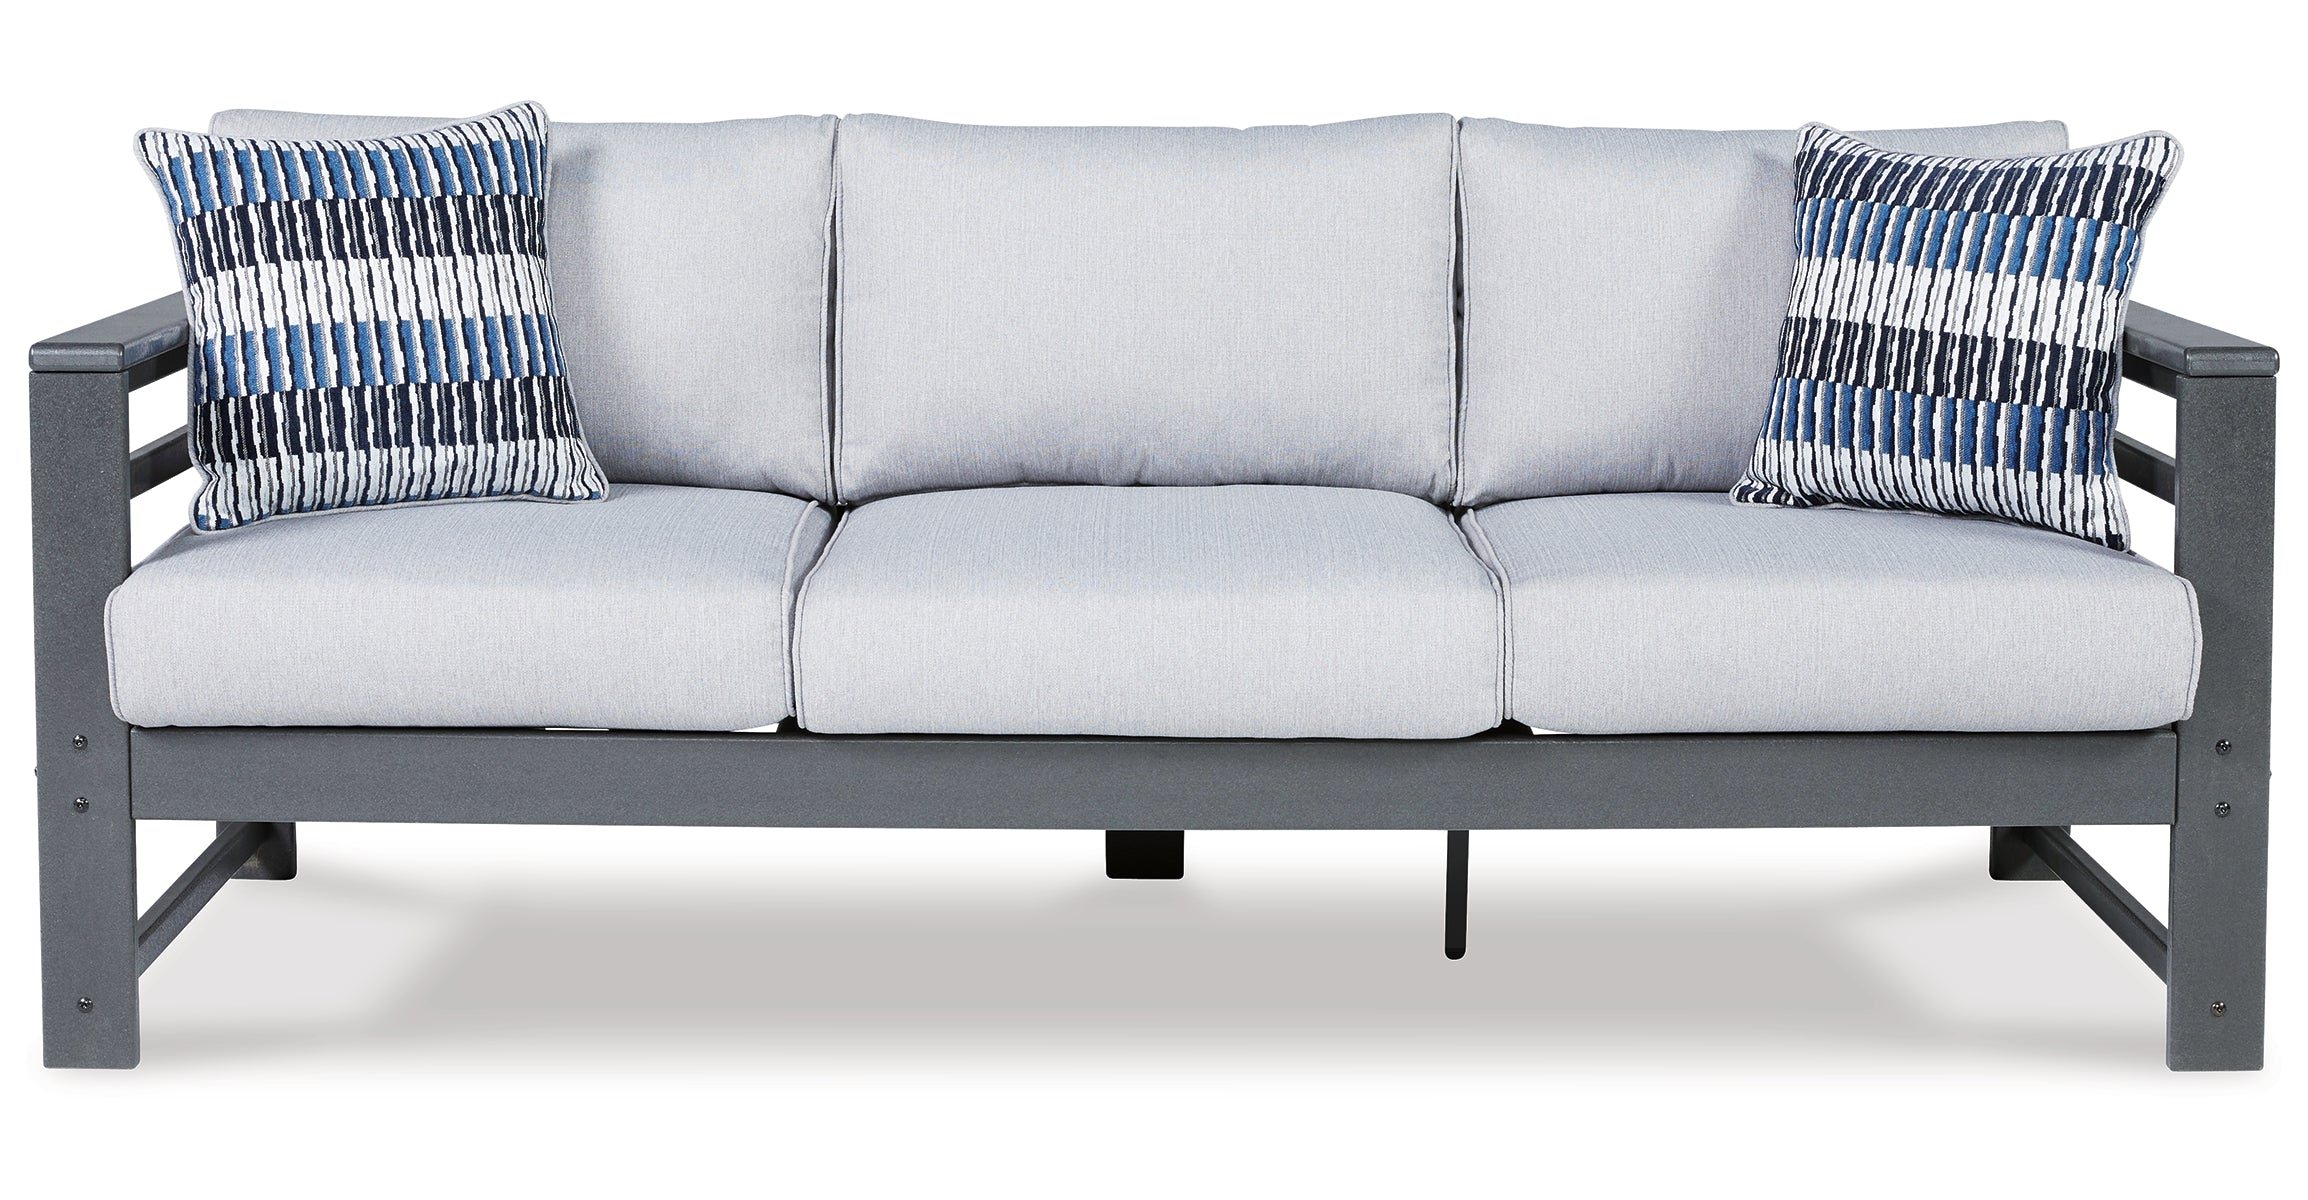 Amora Outdoor Sofa with Cushion